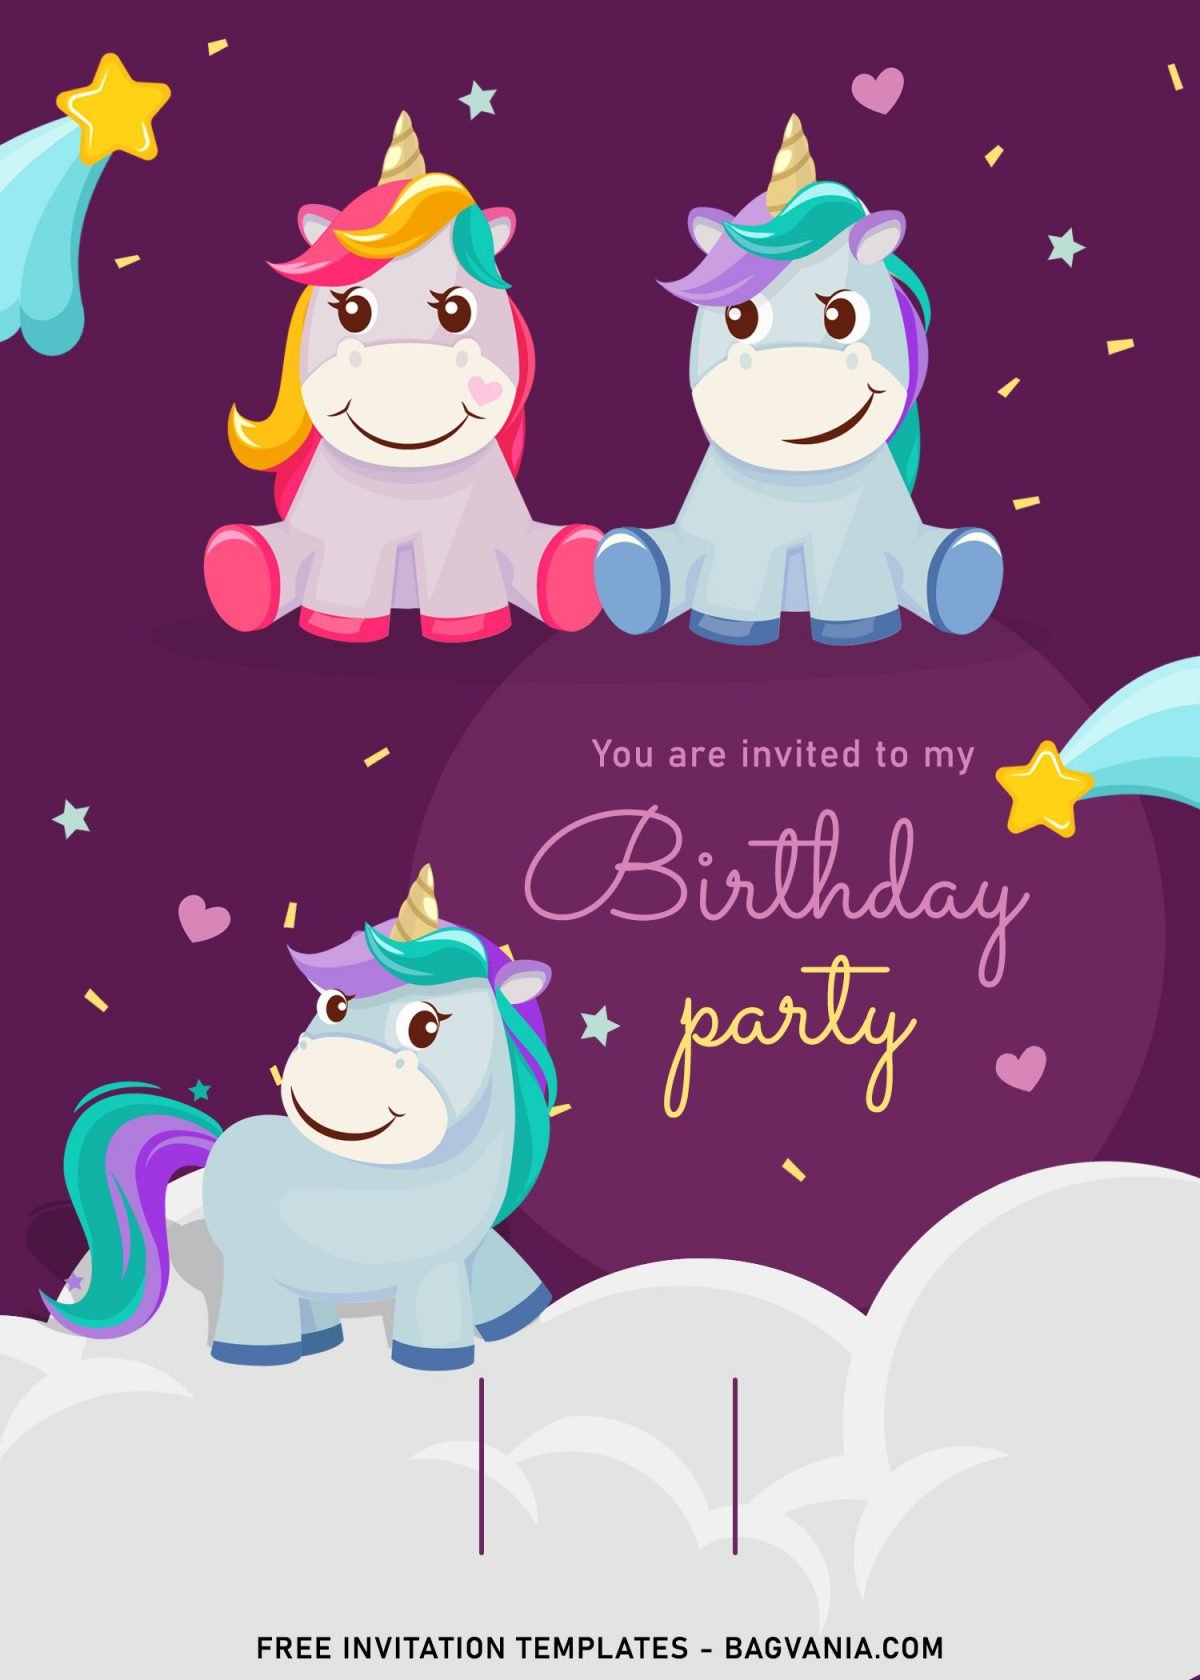 7+ Magical Rainbow Unicorn Birthday Invitation Templates For Kids Birthday Party and has Cute Pastel Rainbow